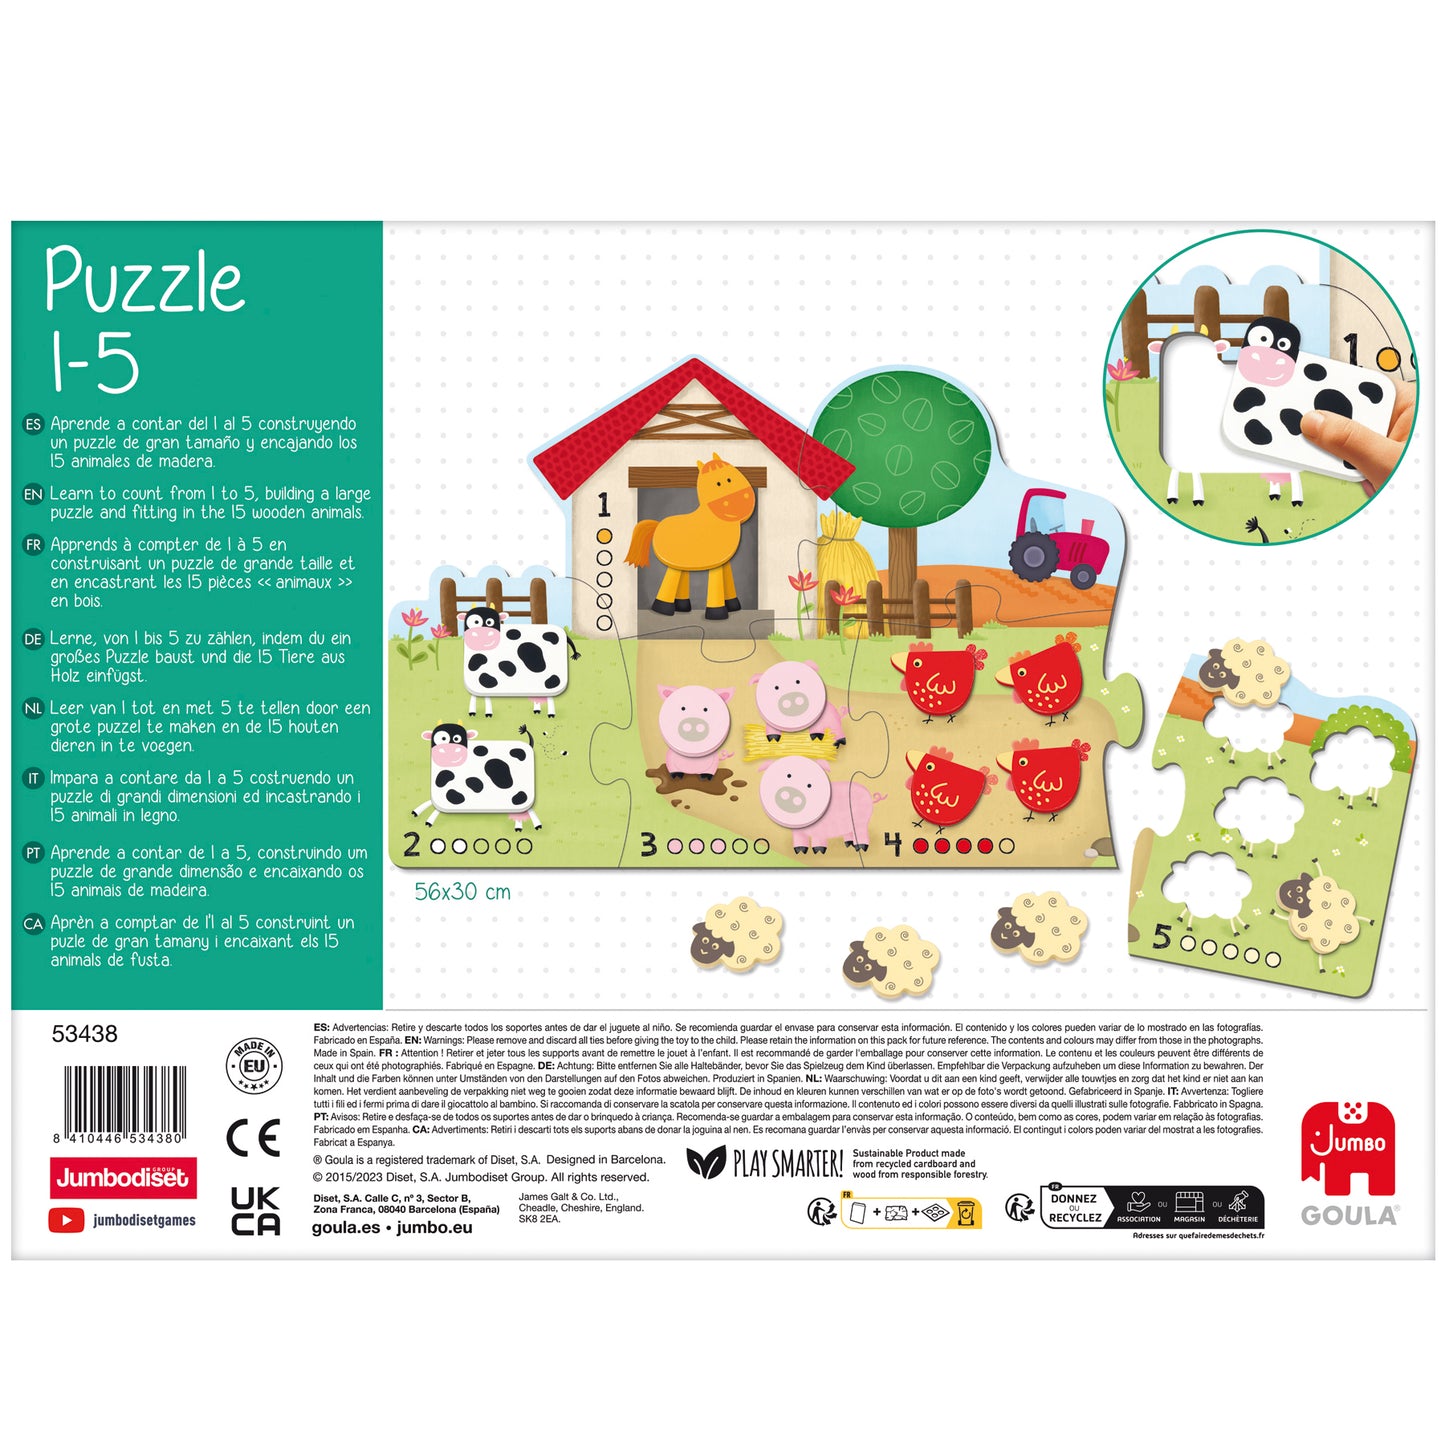 Puzzle 1-5 - product image - Jumboplay.com